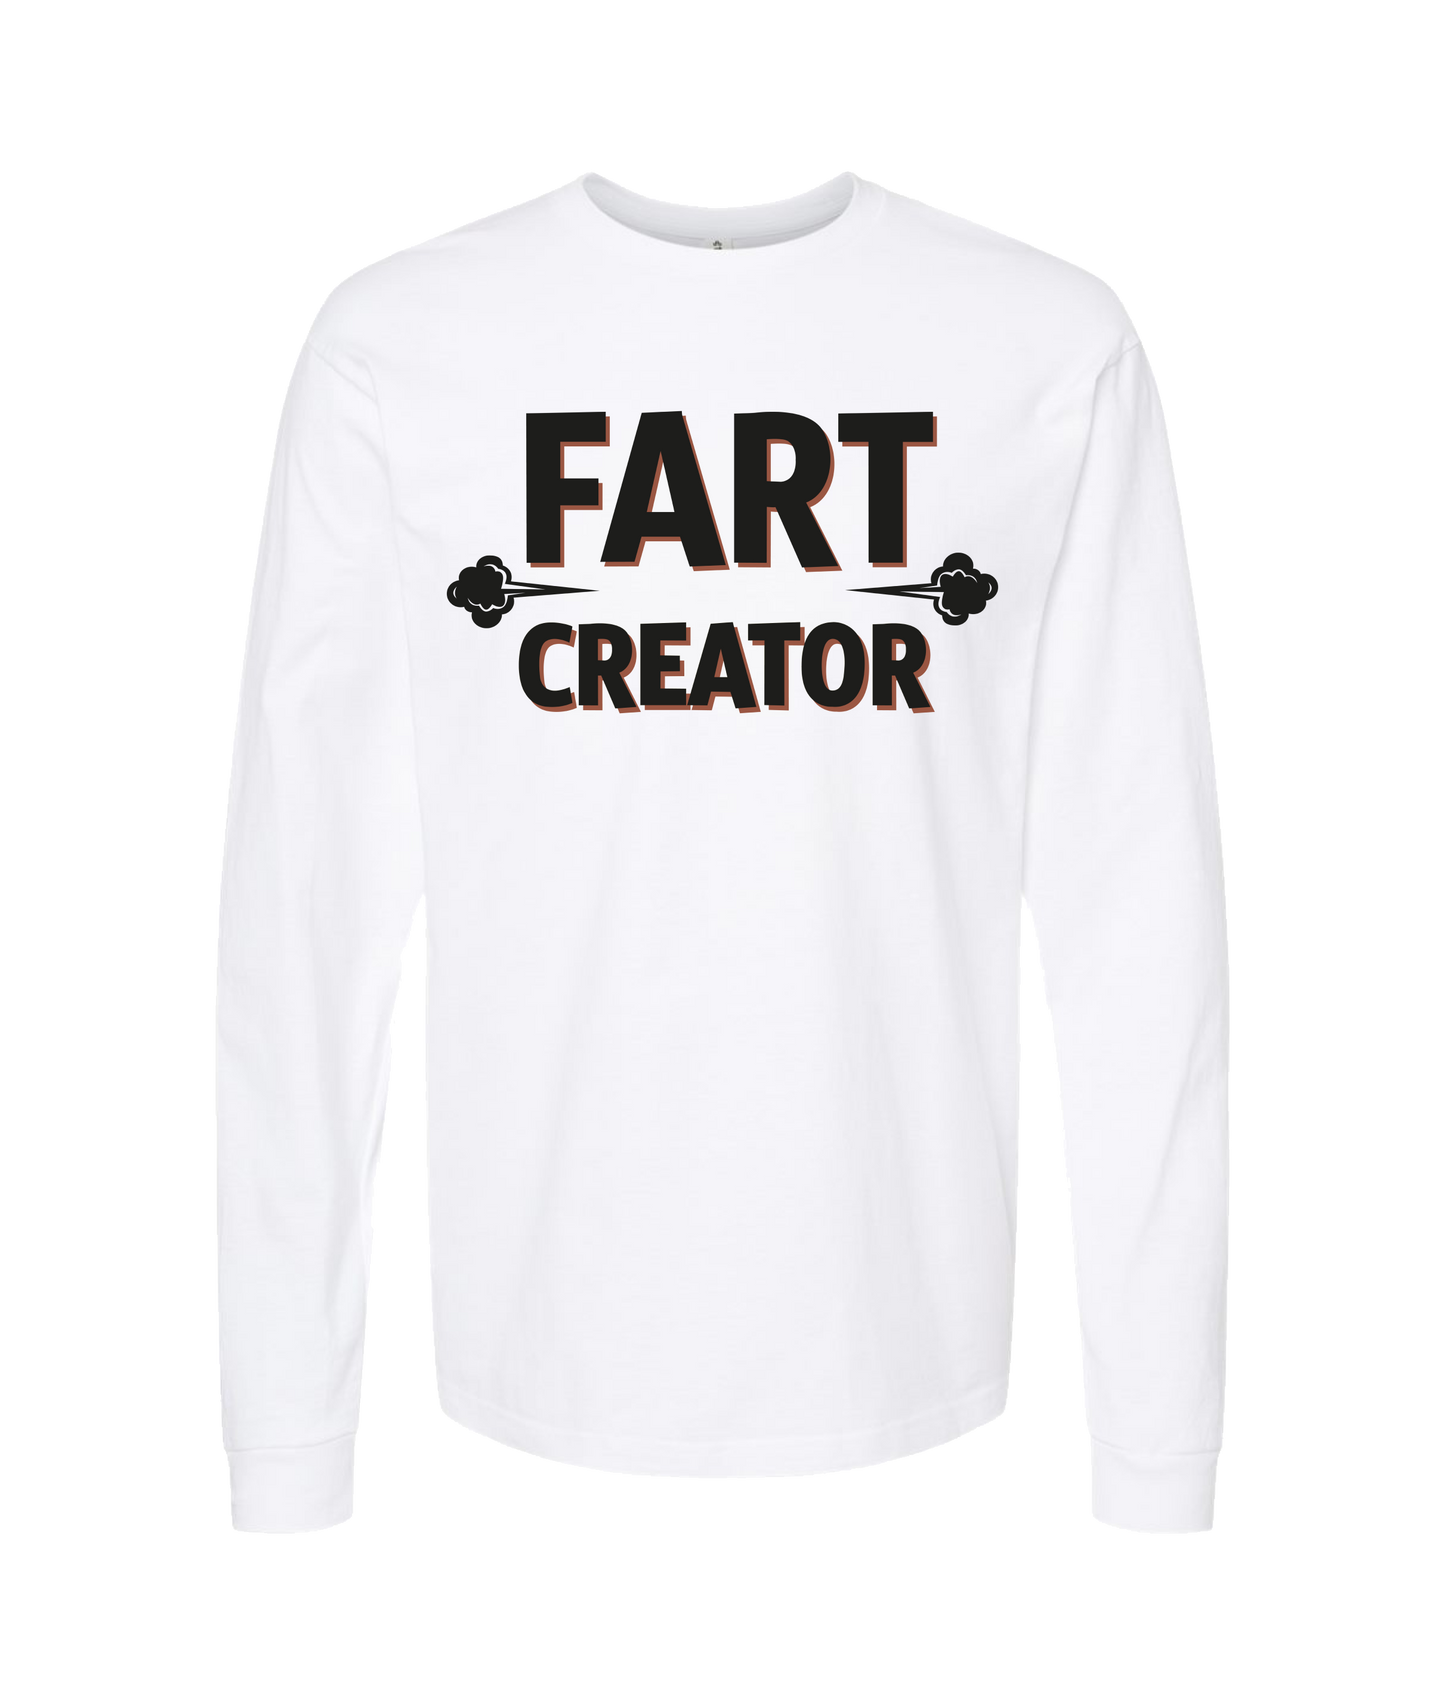 iFart - CREATOR - White Long Sleeve T